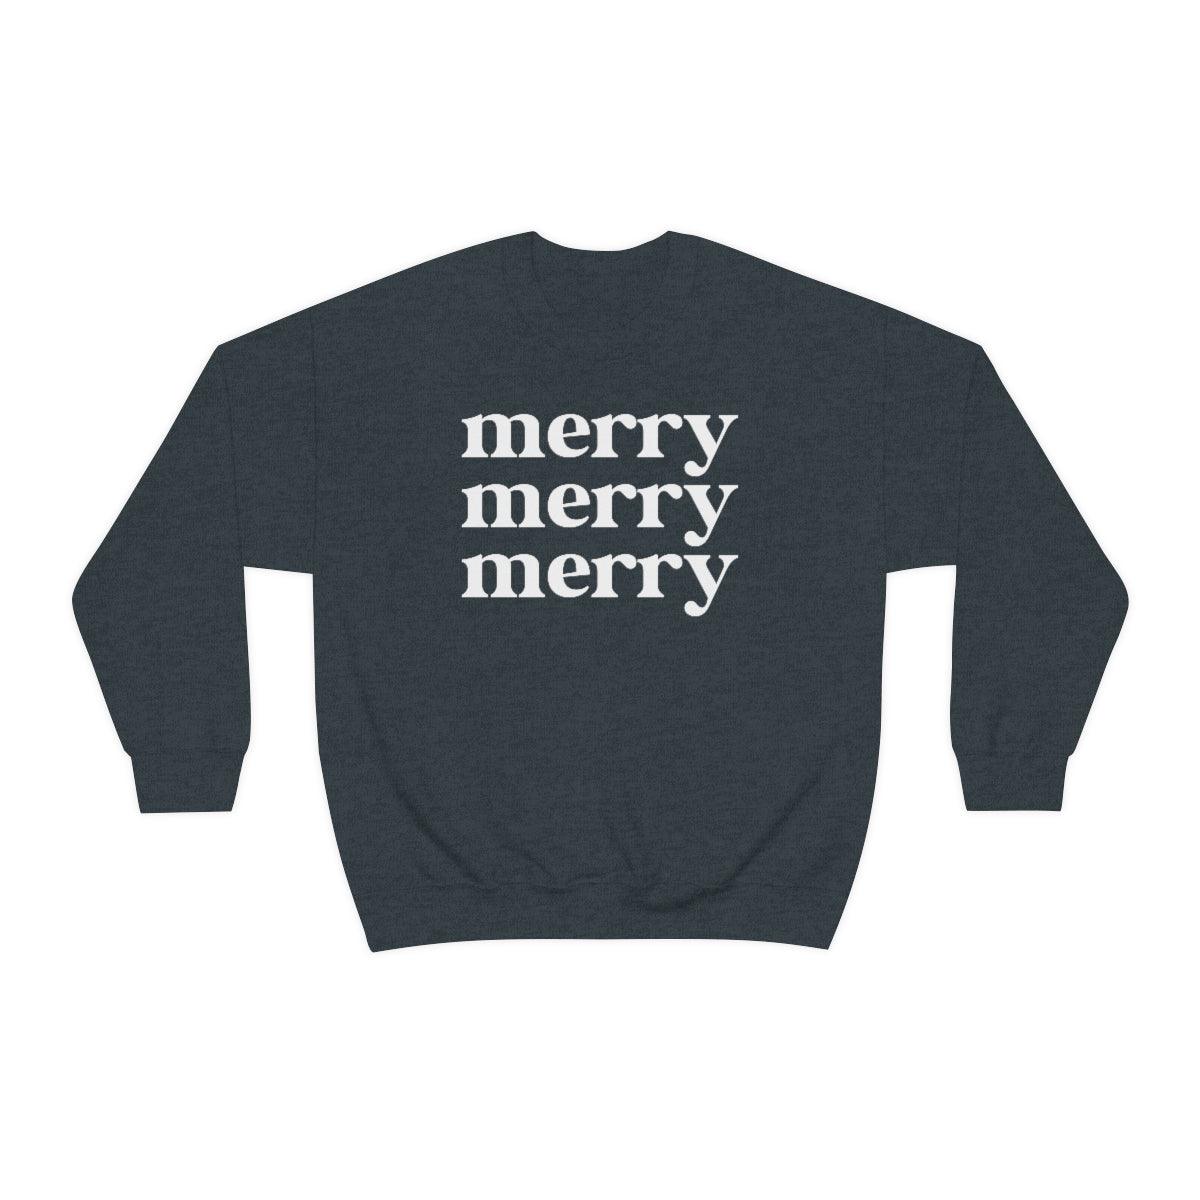 Merry Merry Merry Christmas Crewneck Sweater